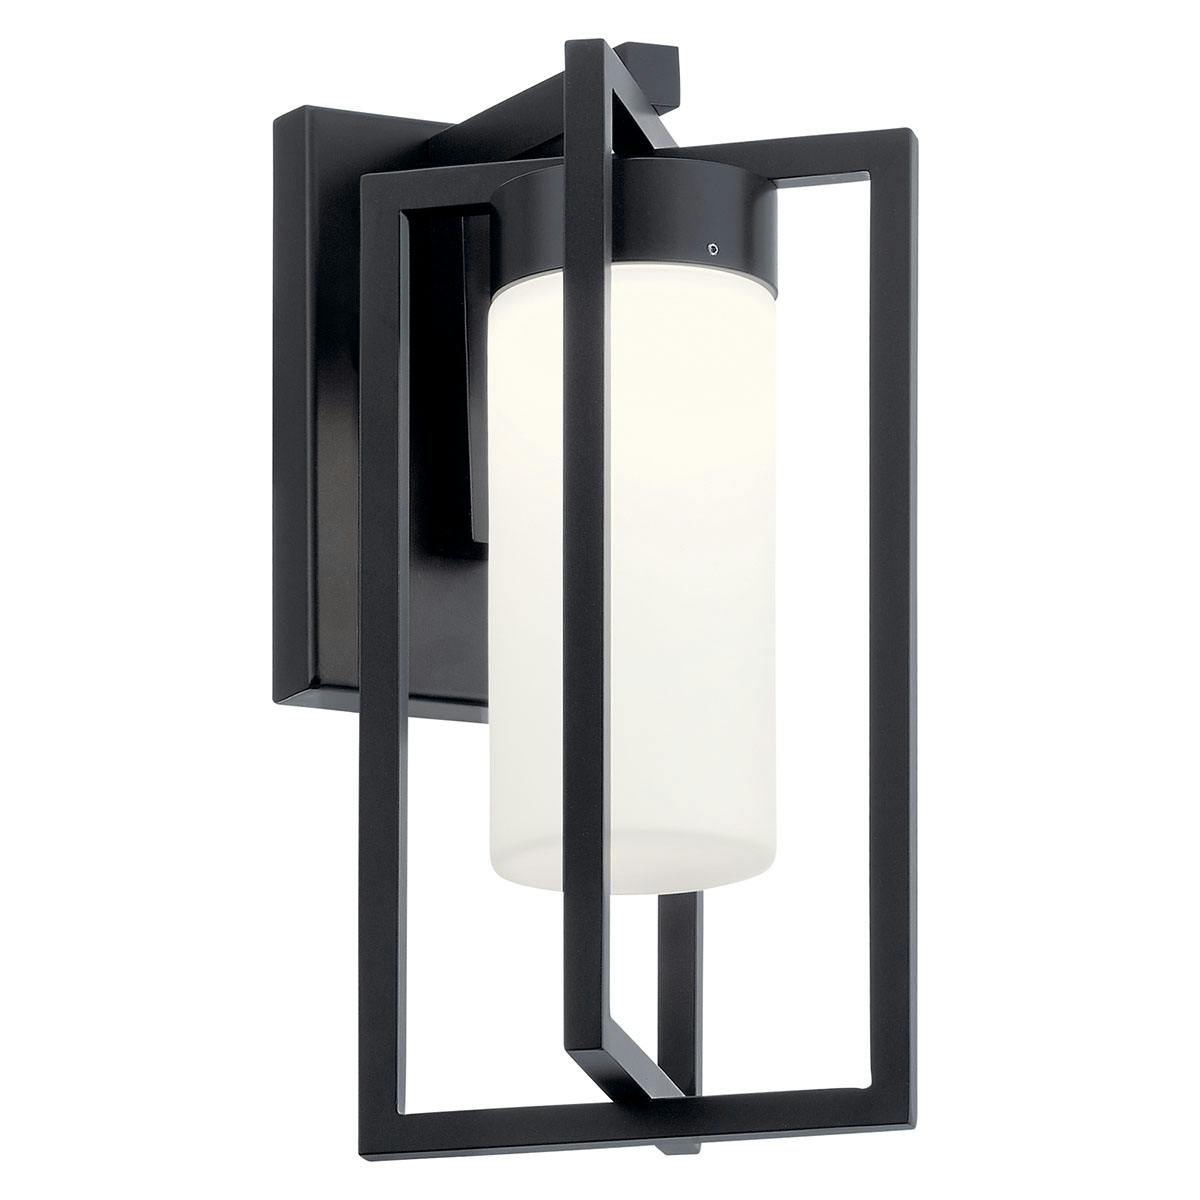 Drega 14" 1 LED Wall Light Glass Black on a white background